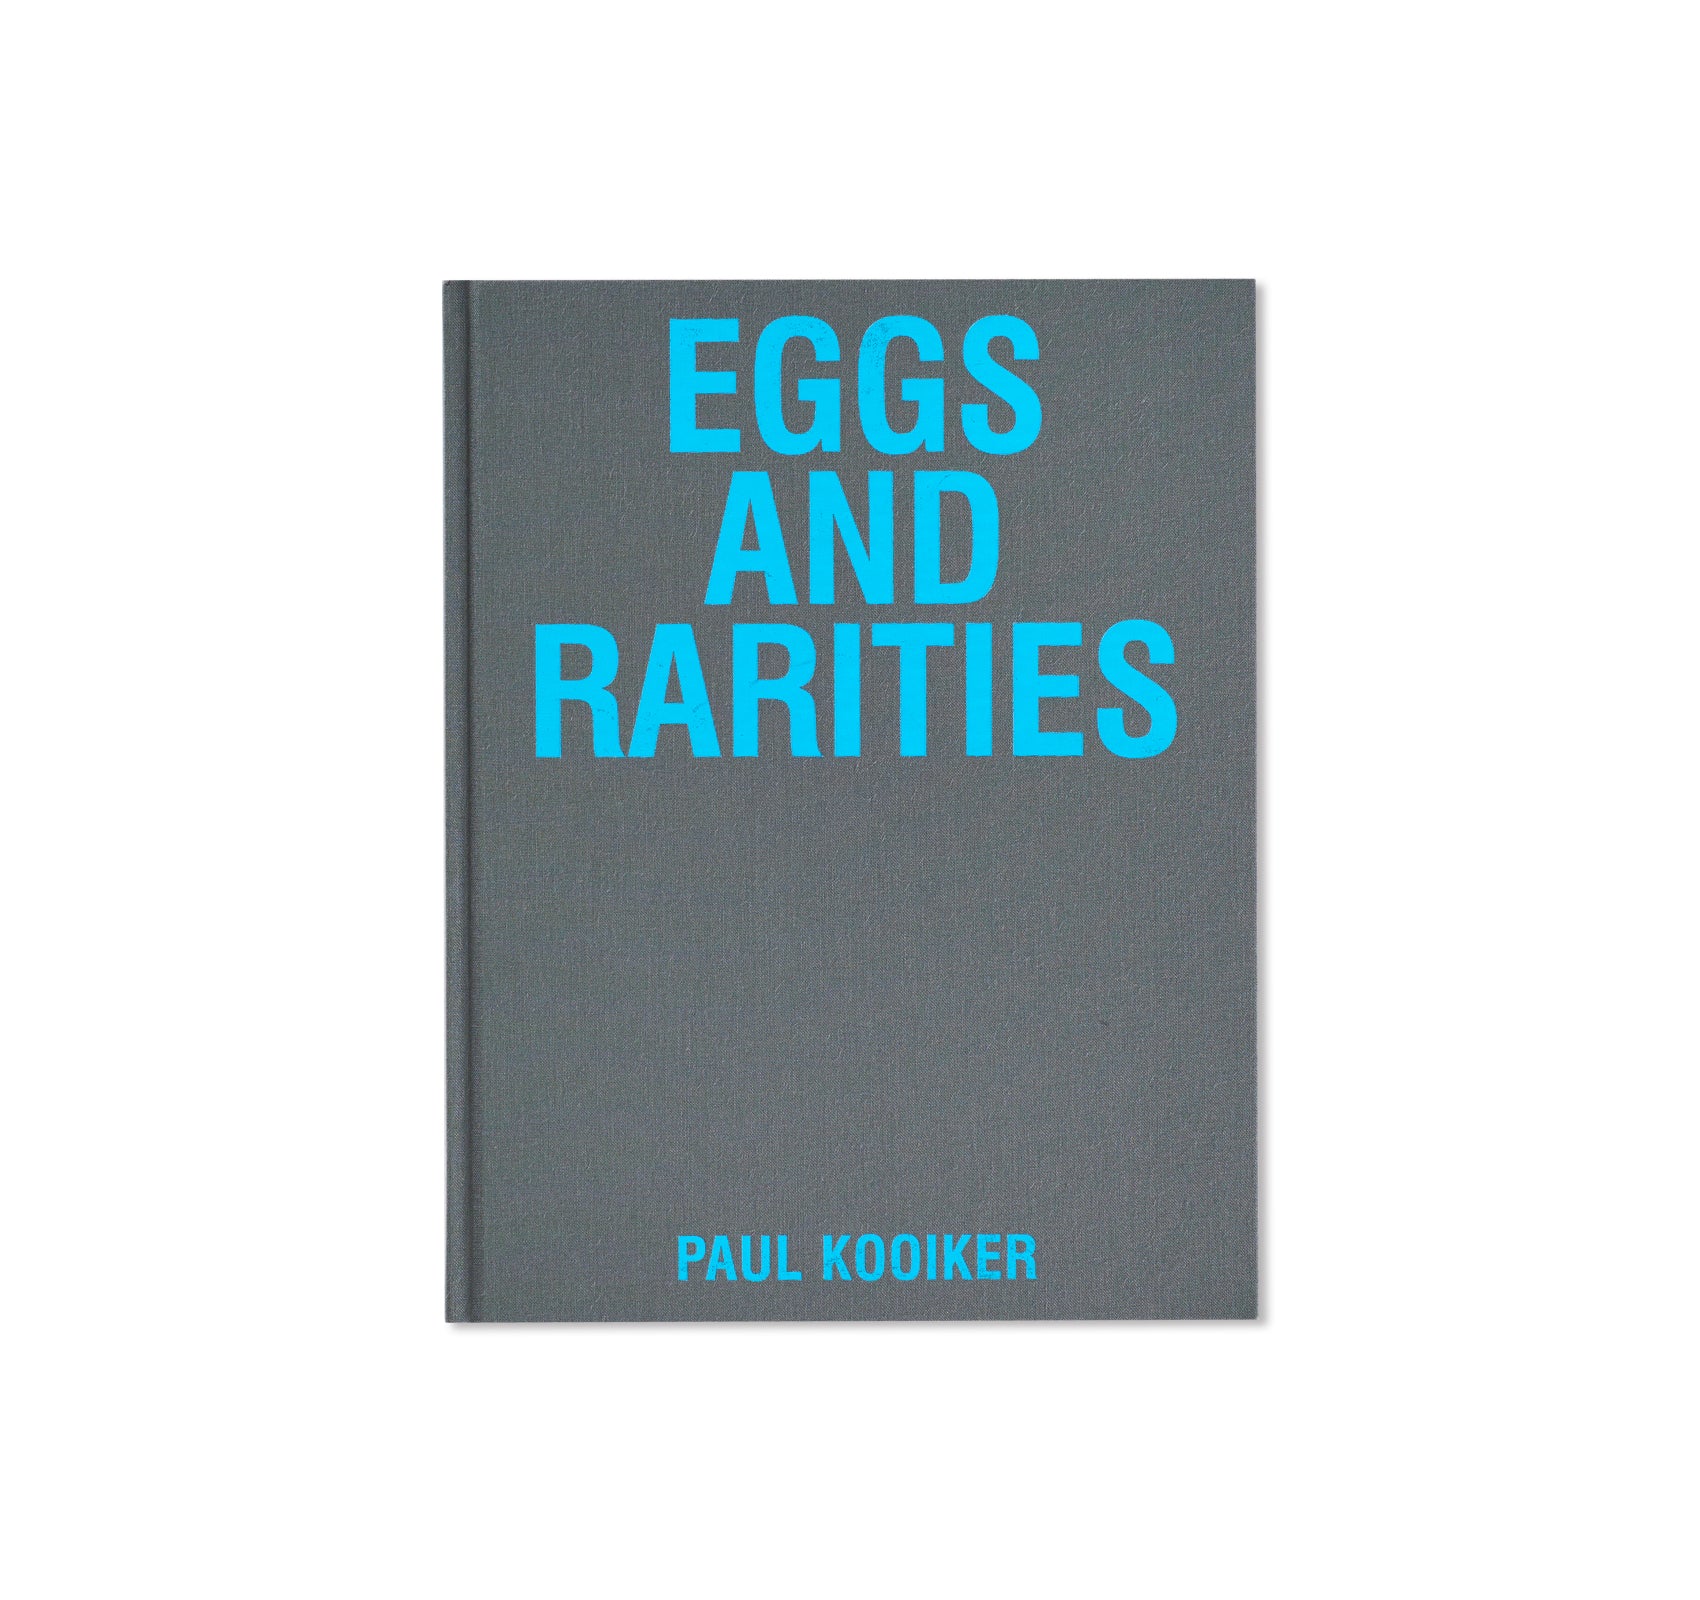 EGGS AND RARITIES by Paul Kooiker